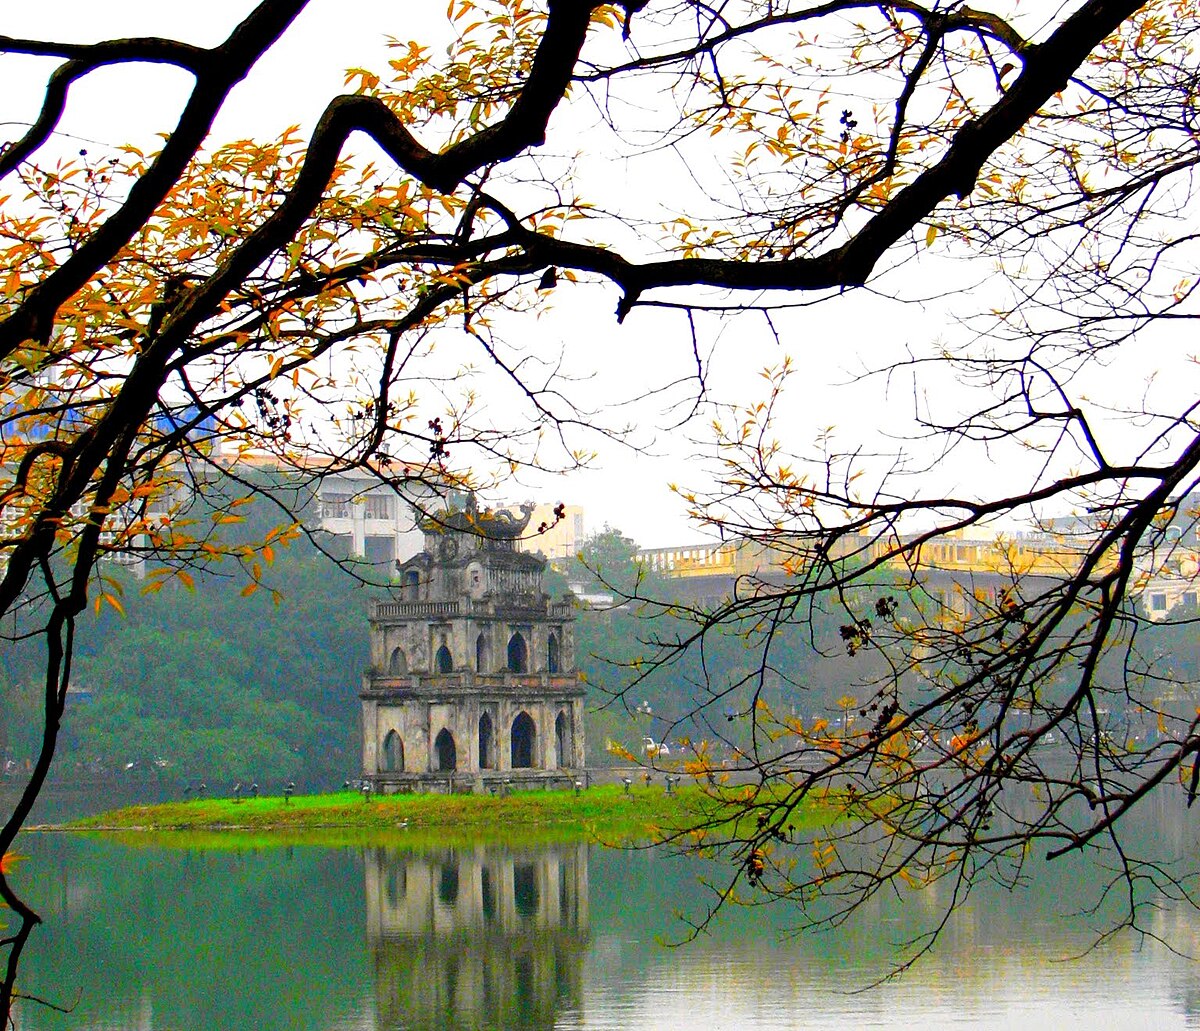 Hoàn Kiếm Lake - Wikipedia